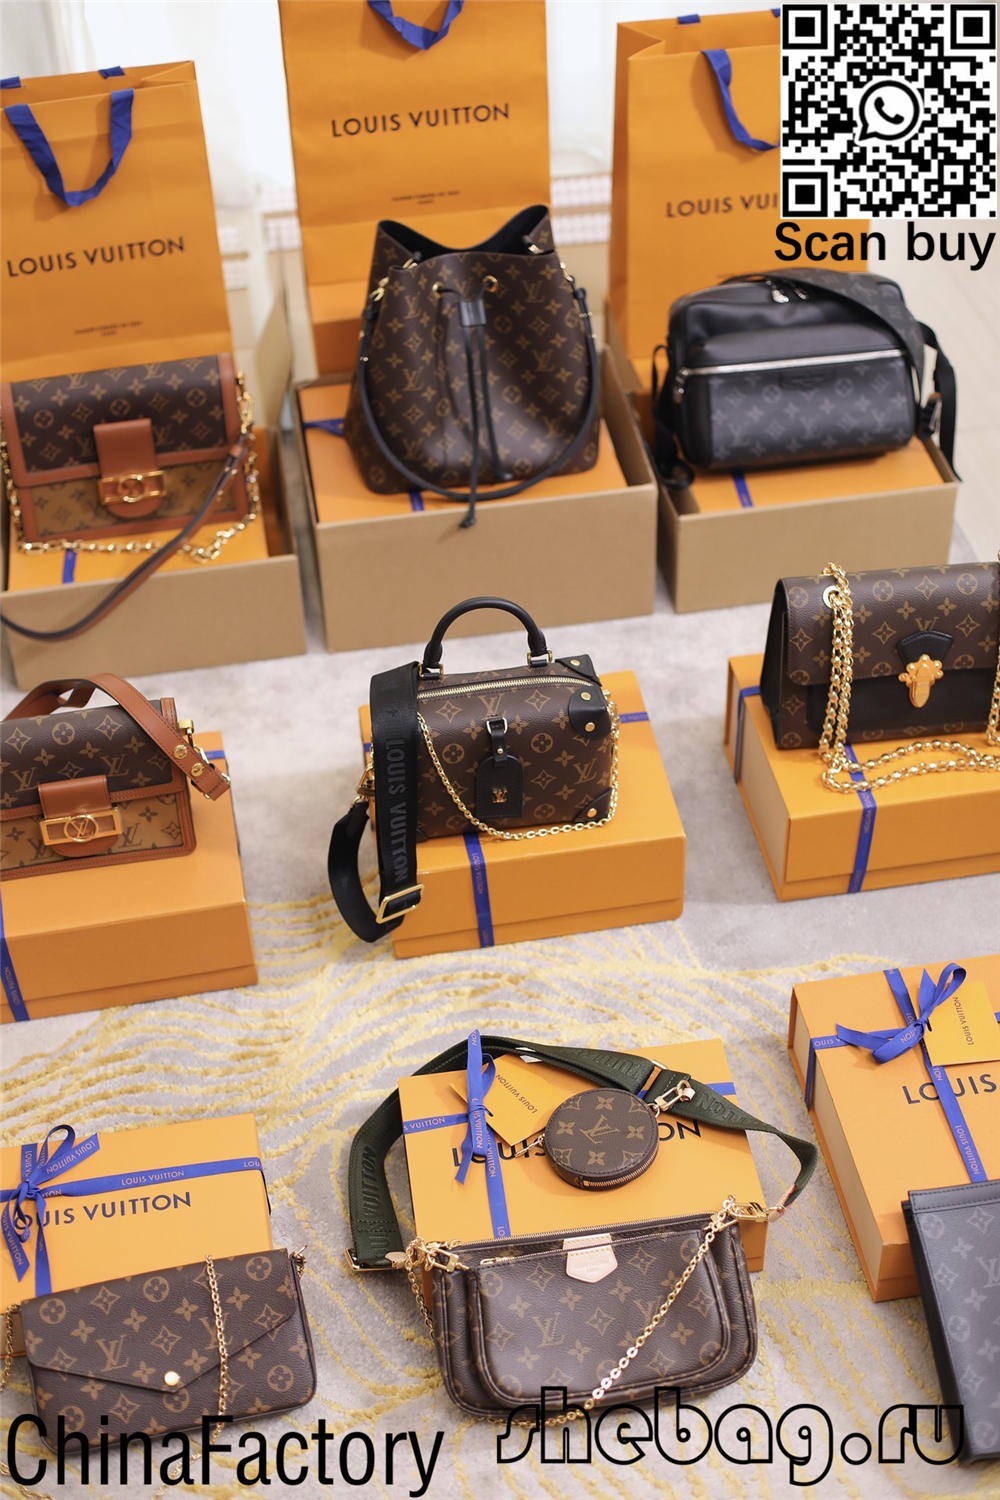 Sacculi Ludovici Vuitton Replica Sinarum Lupum Vili (2022 latest) -Best Quality Fake Louis Vuitton Bag Online Store, Replica designer bag ru